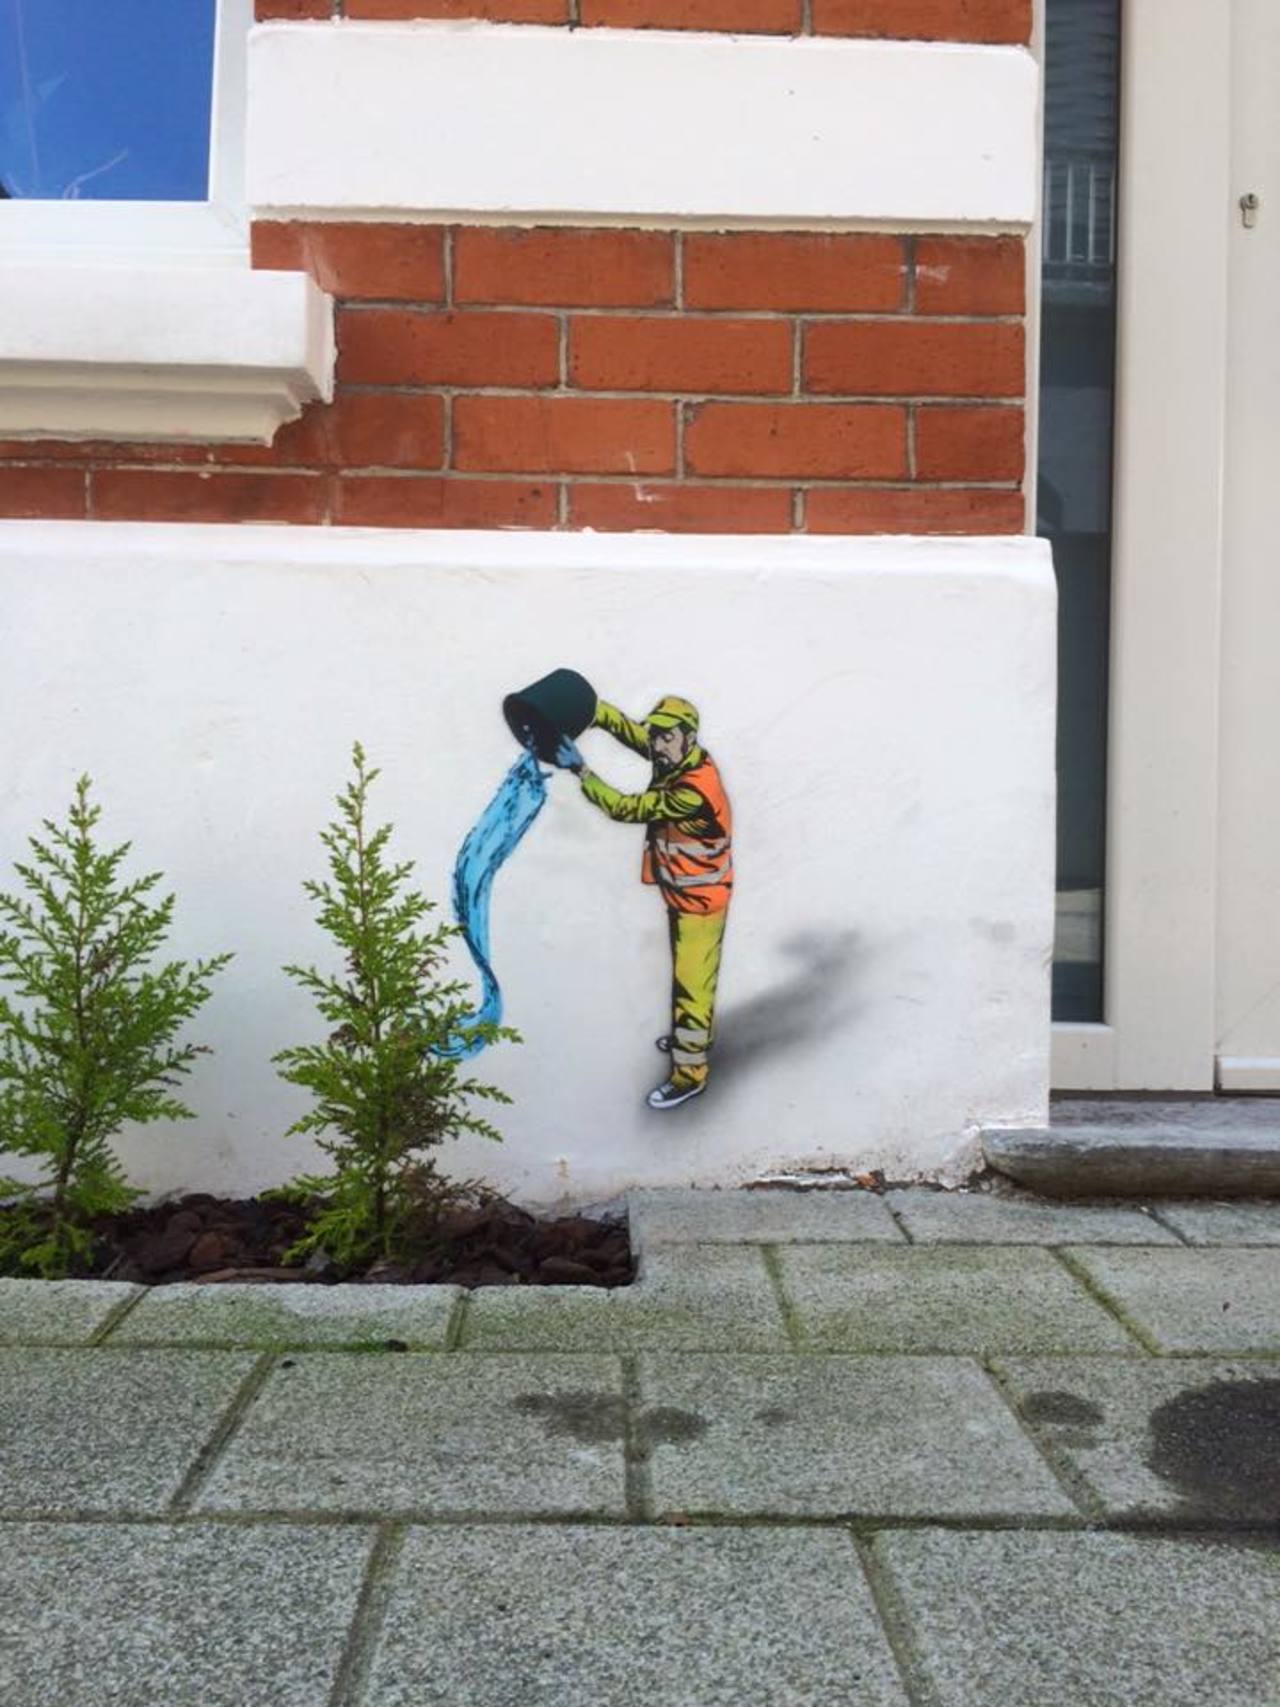 Miniature pieces by Jaune in Oostende, Belgium http://ow.ly/10mhkb #Art #StreetArt #Graffiti #Water #Plants https://t.co/nlT6UJyi9D